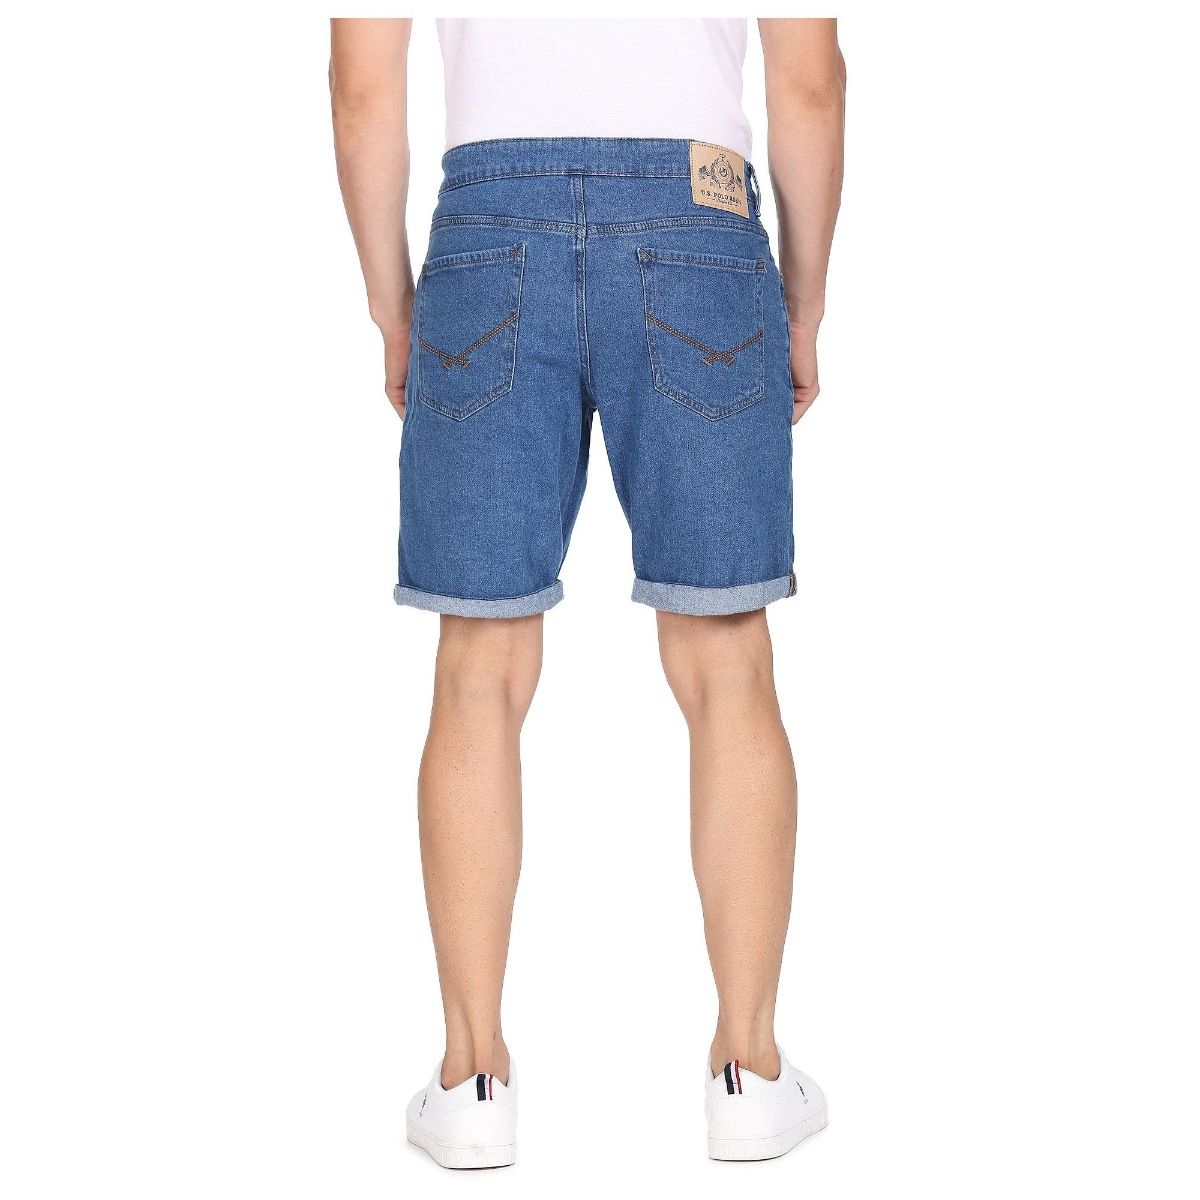 ASOS DESIGN slim mid length denim shorts in mid wash blue | ASOS